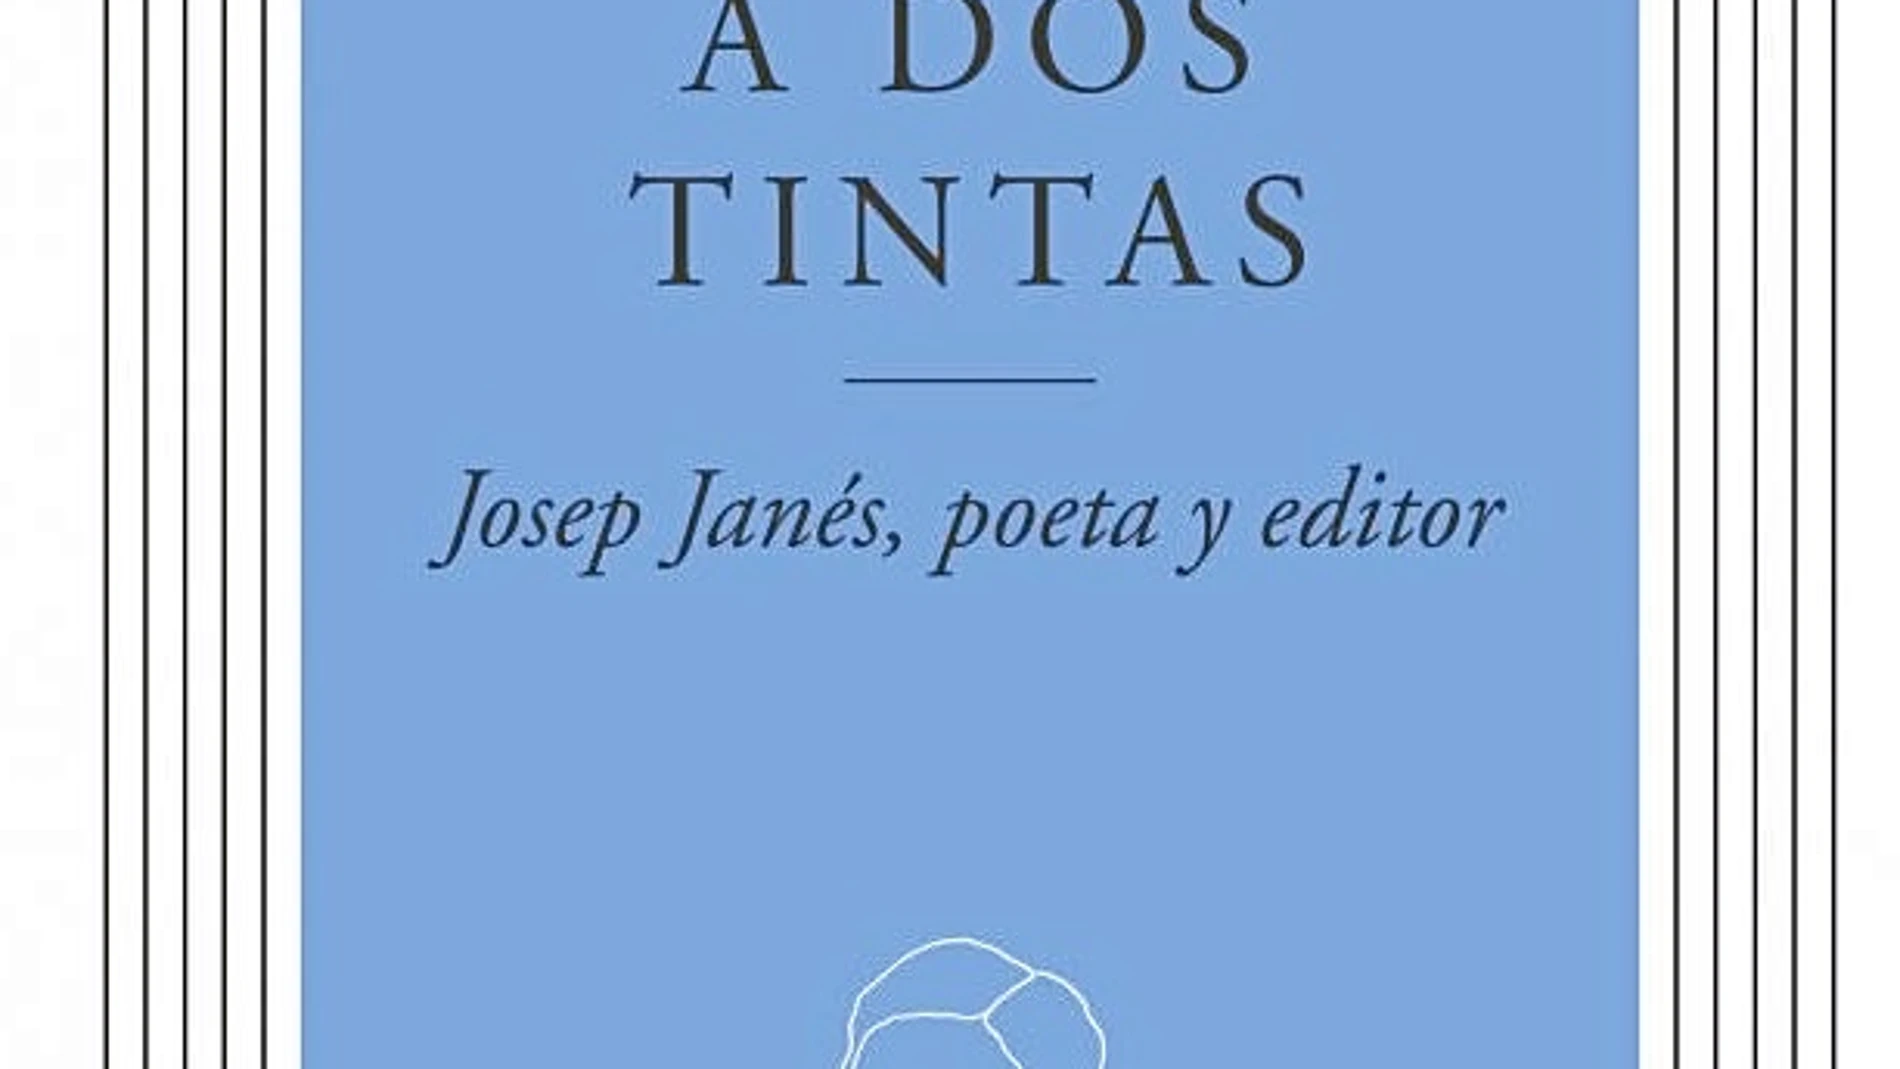 Josep Janés, la vida hecha tinta